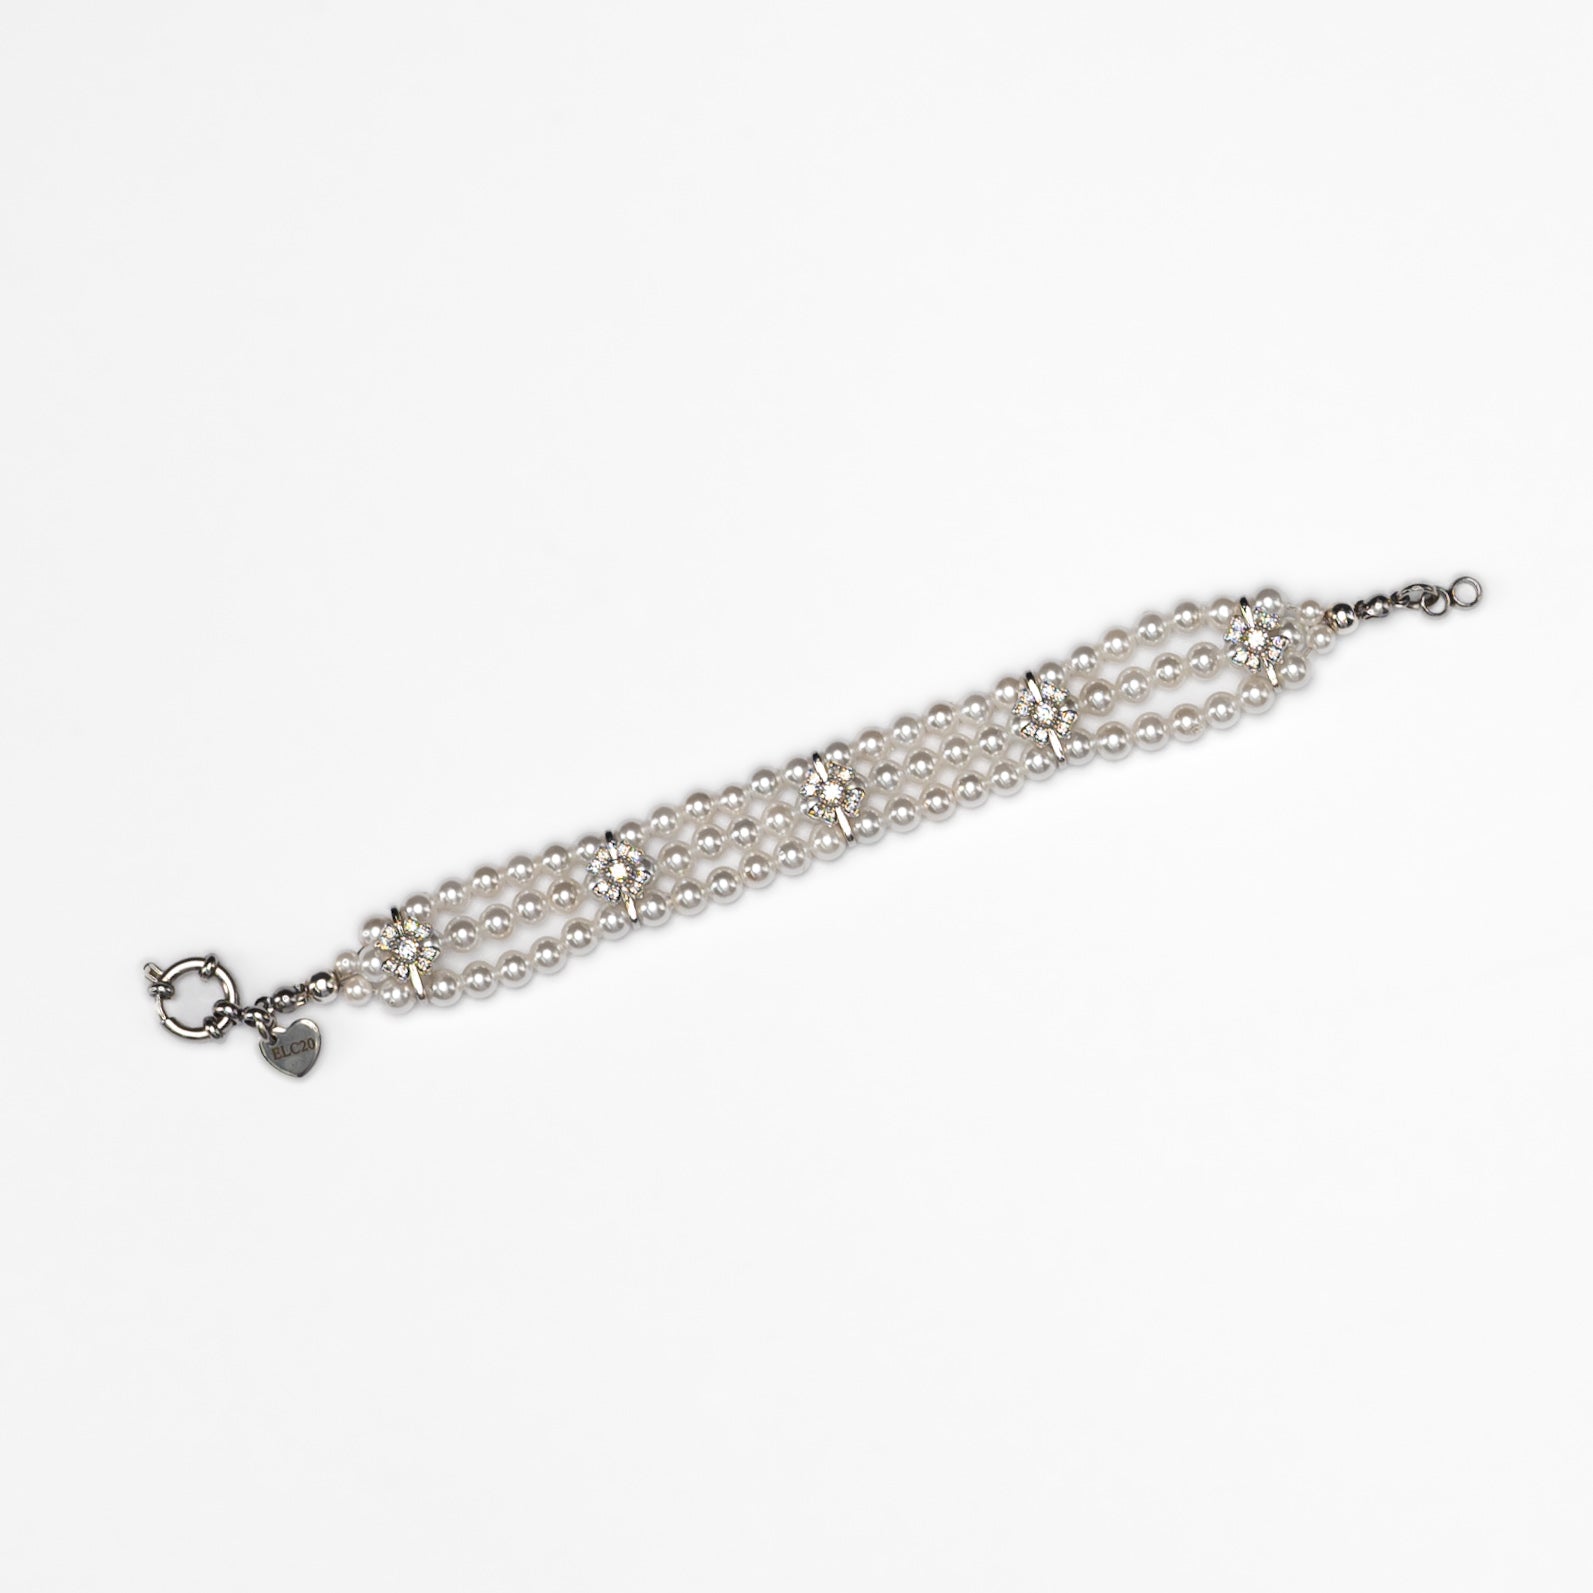 Illusion Pearls & Silver Bracelet